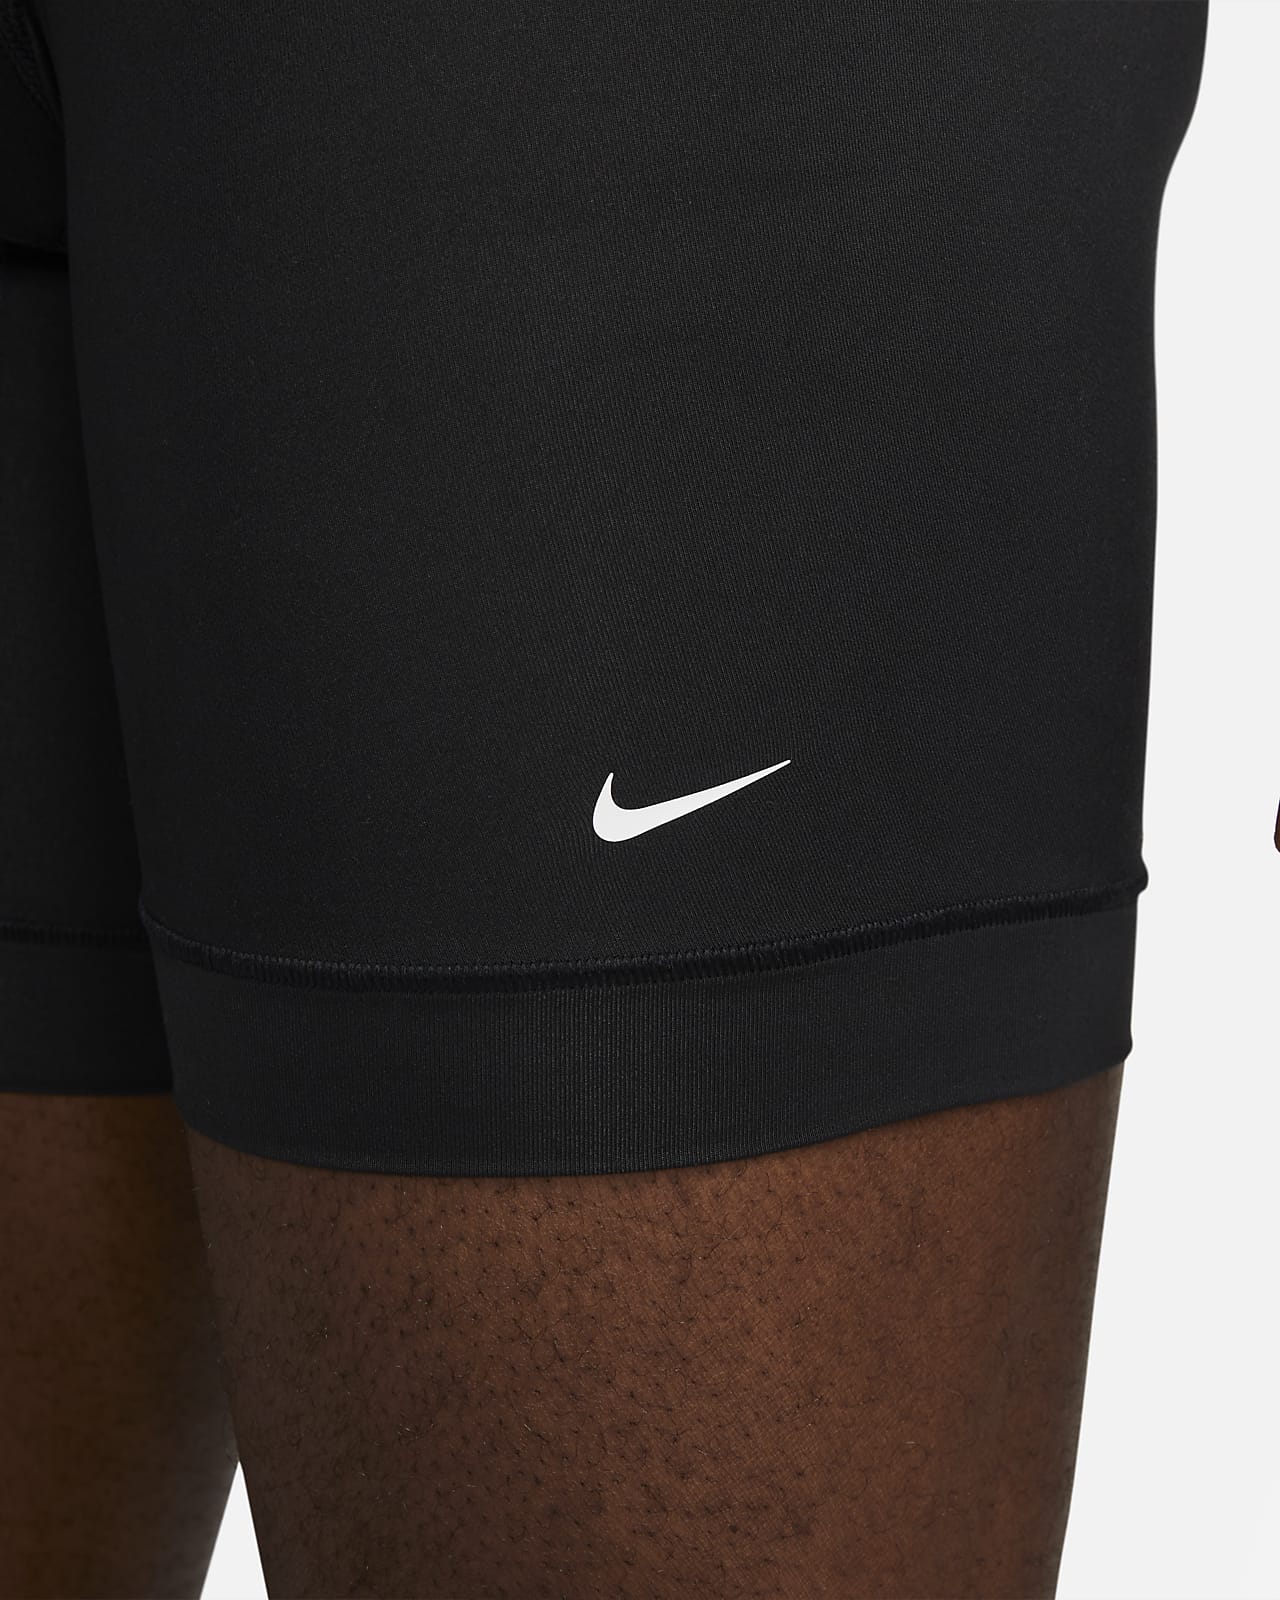 Nike Flex Micro Men's Long Boxer Briefs (3-Pack).